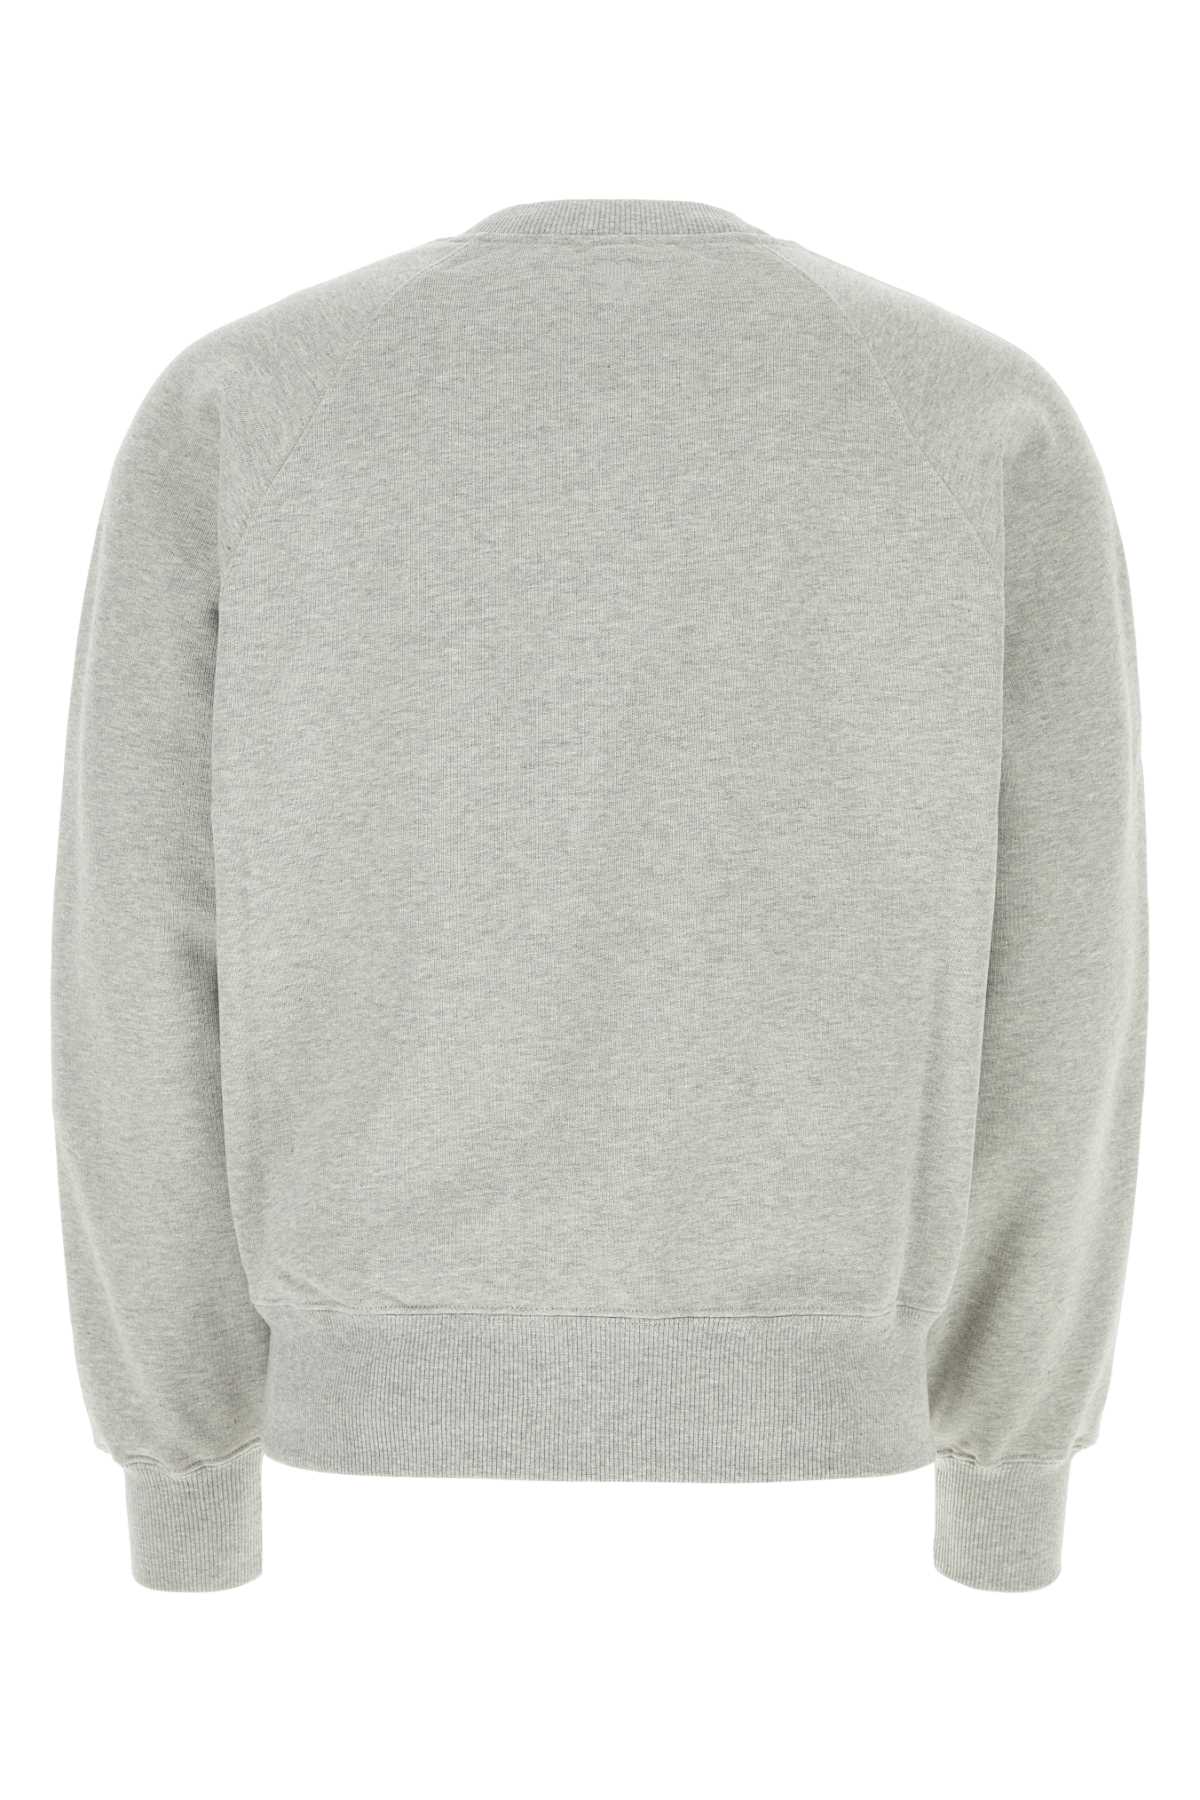 Shop Ami Alexandre Mattiussi Melange Grey Stretch Cotton Sweatshirt In Heatherashgrey